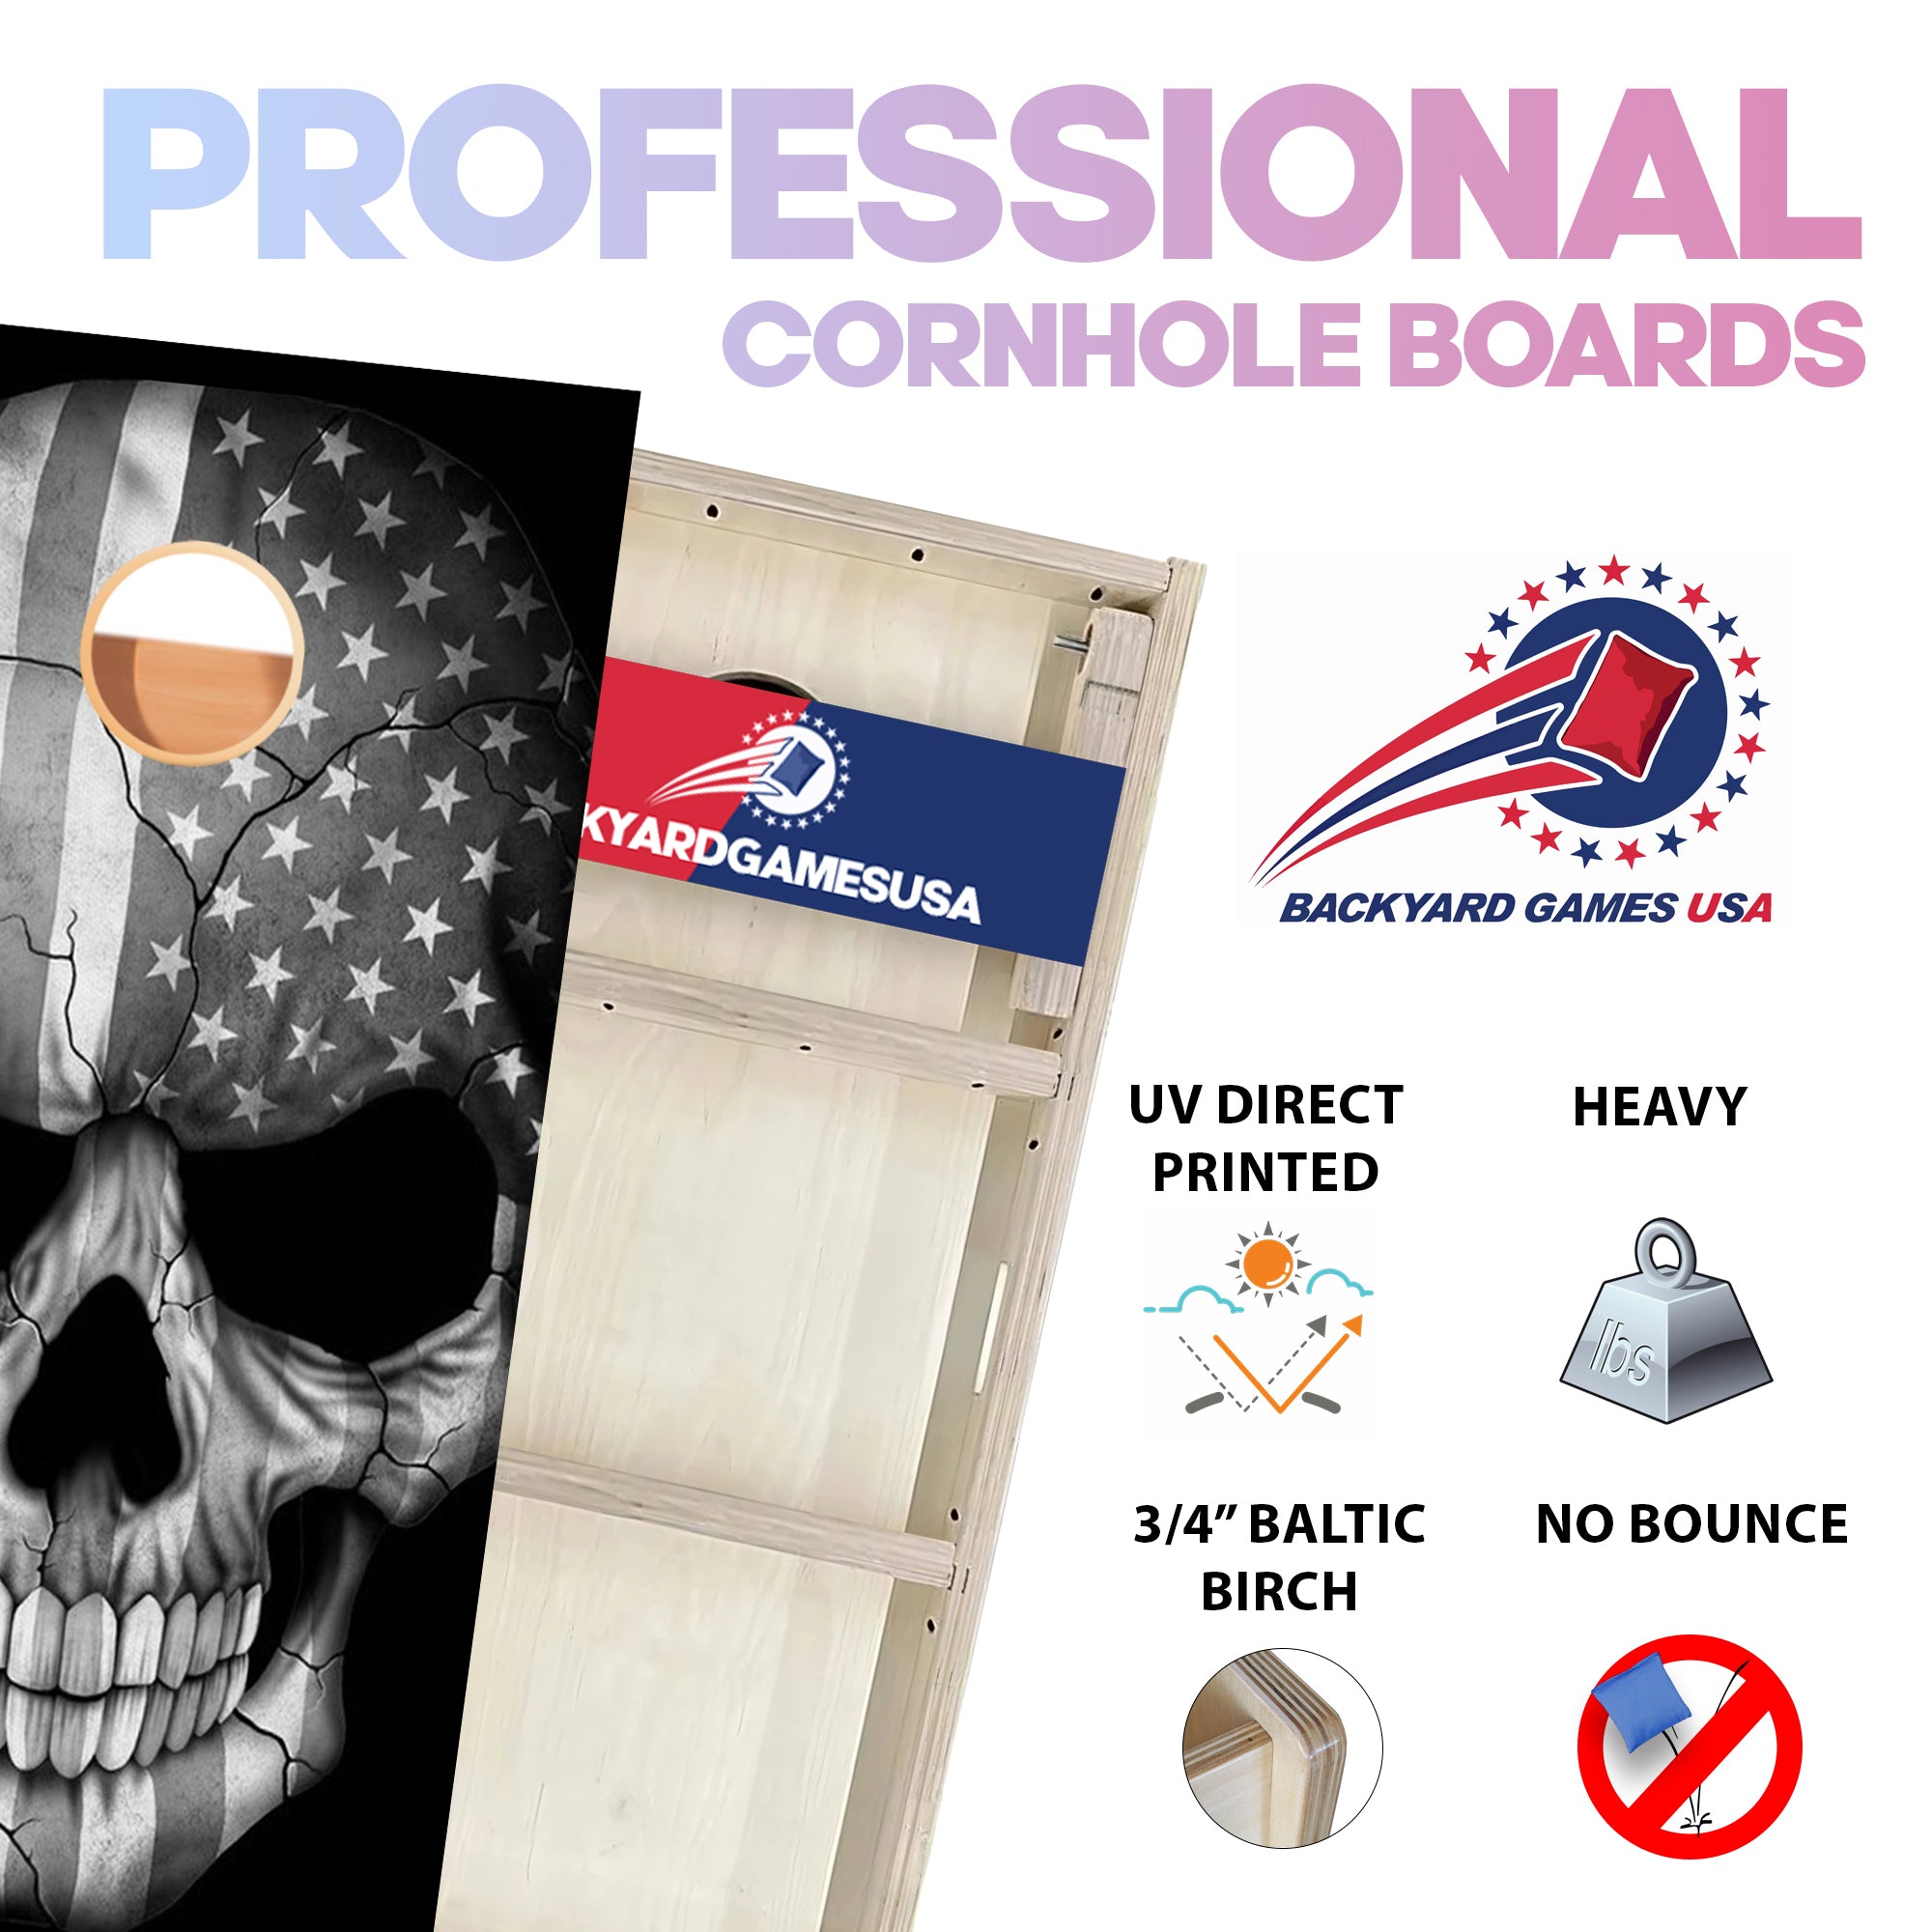 Grey Skull Professional Cornhole Boards